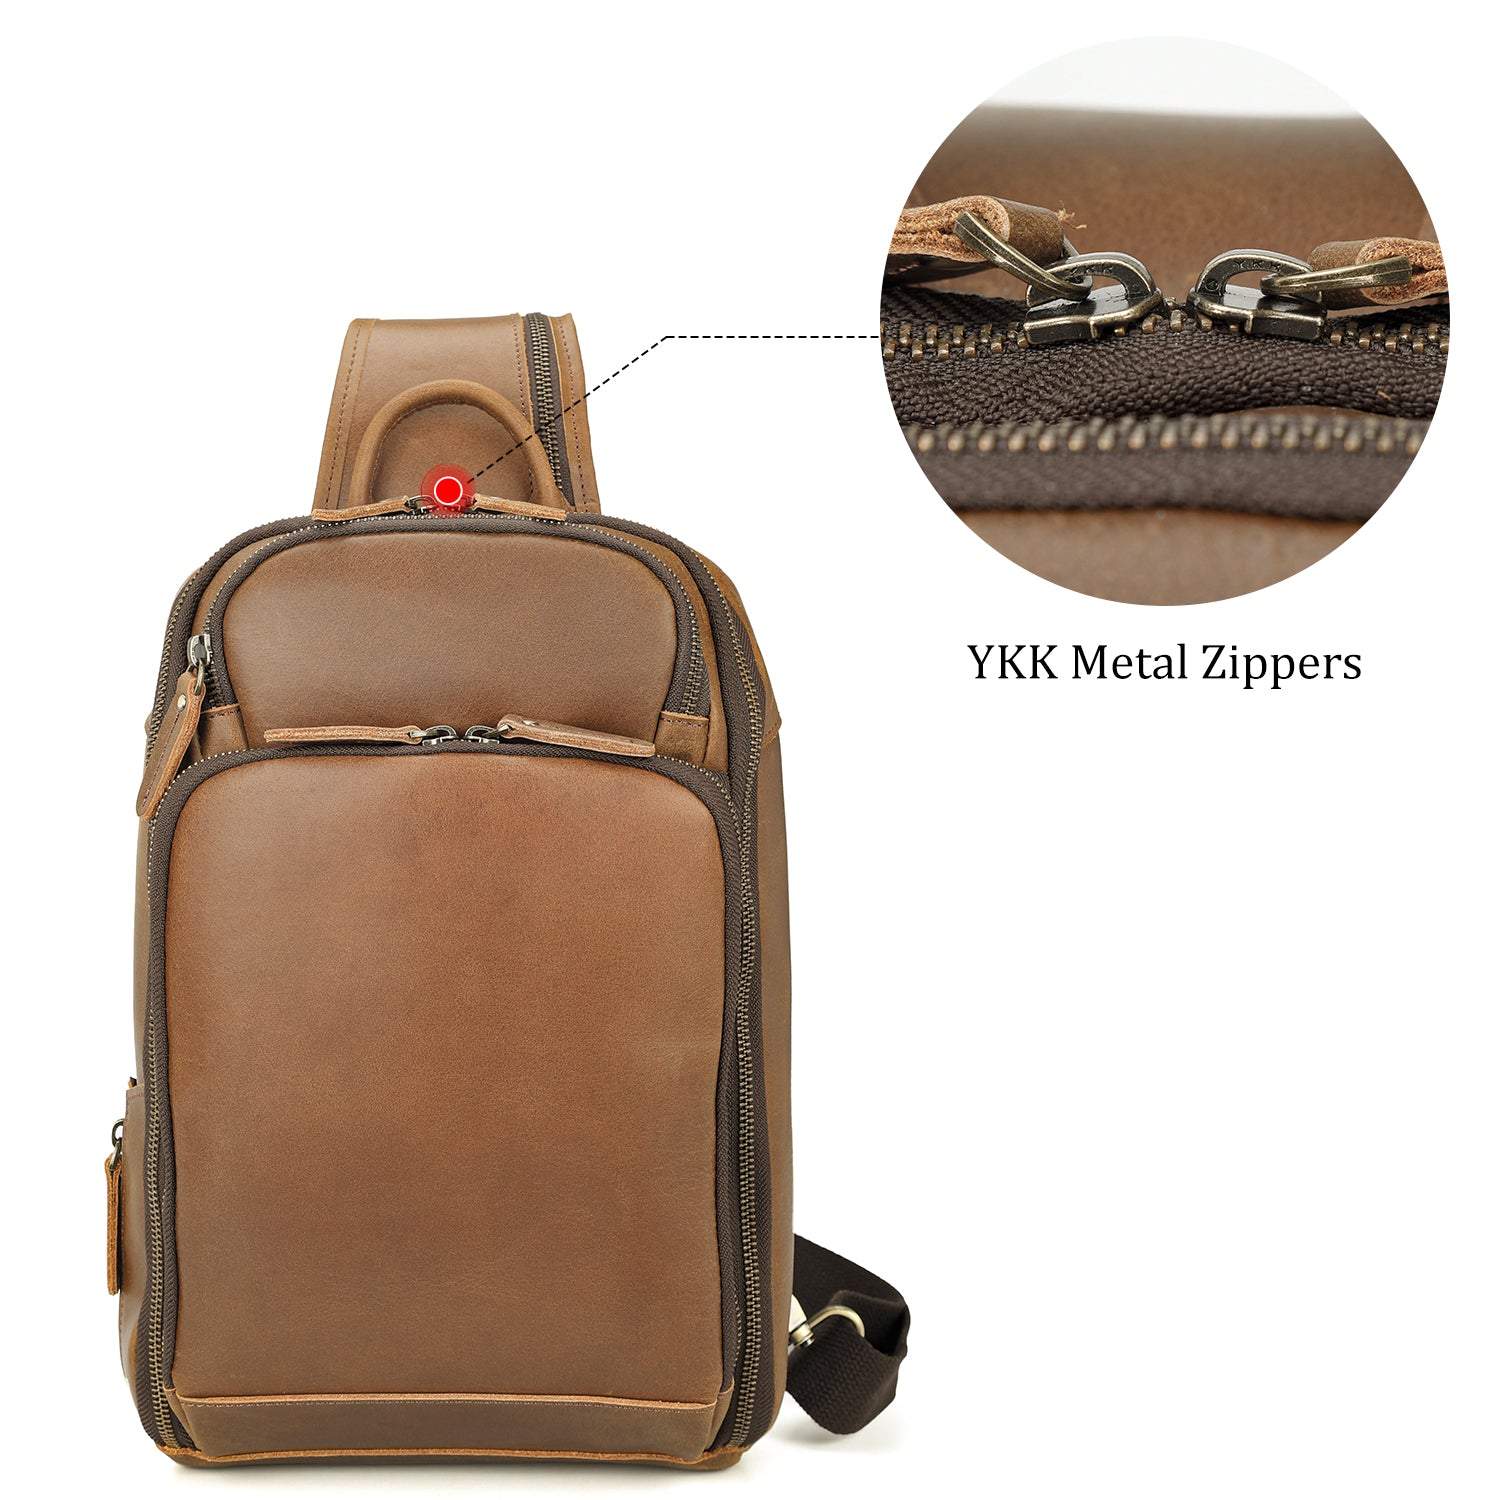 Polare Modern Style Sling Shoulder Bag Men’s Travel/Hiking Daypack (Brown,YKK Metal Zippers)